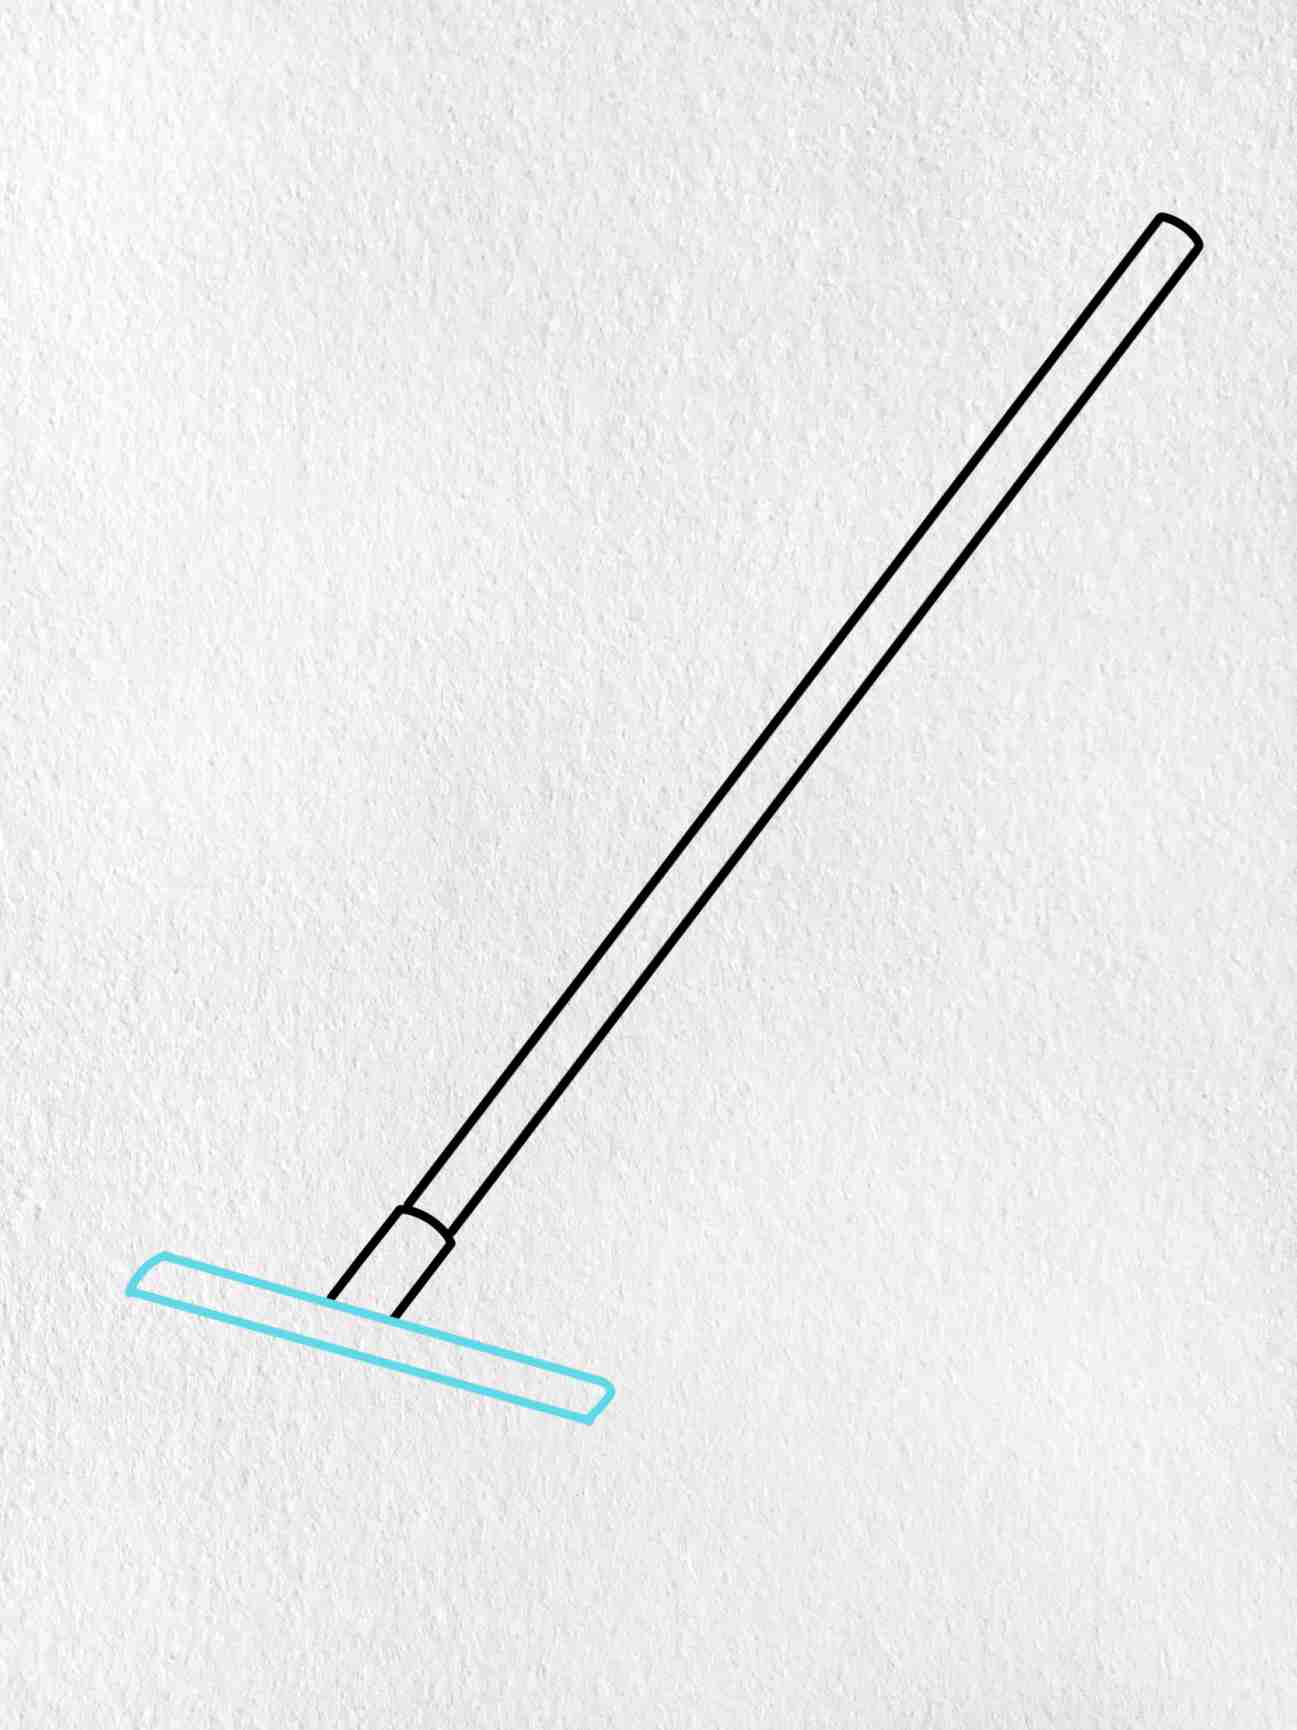 Draw a rake